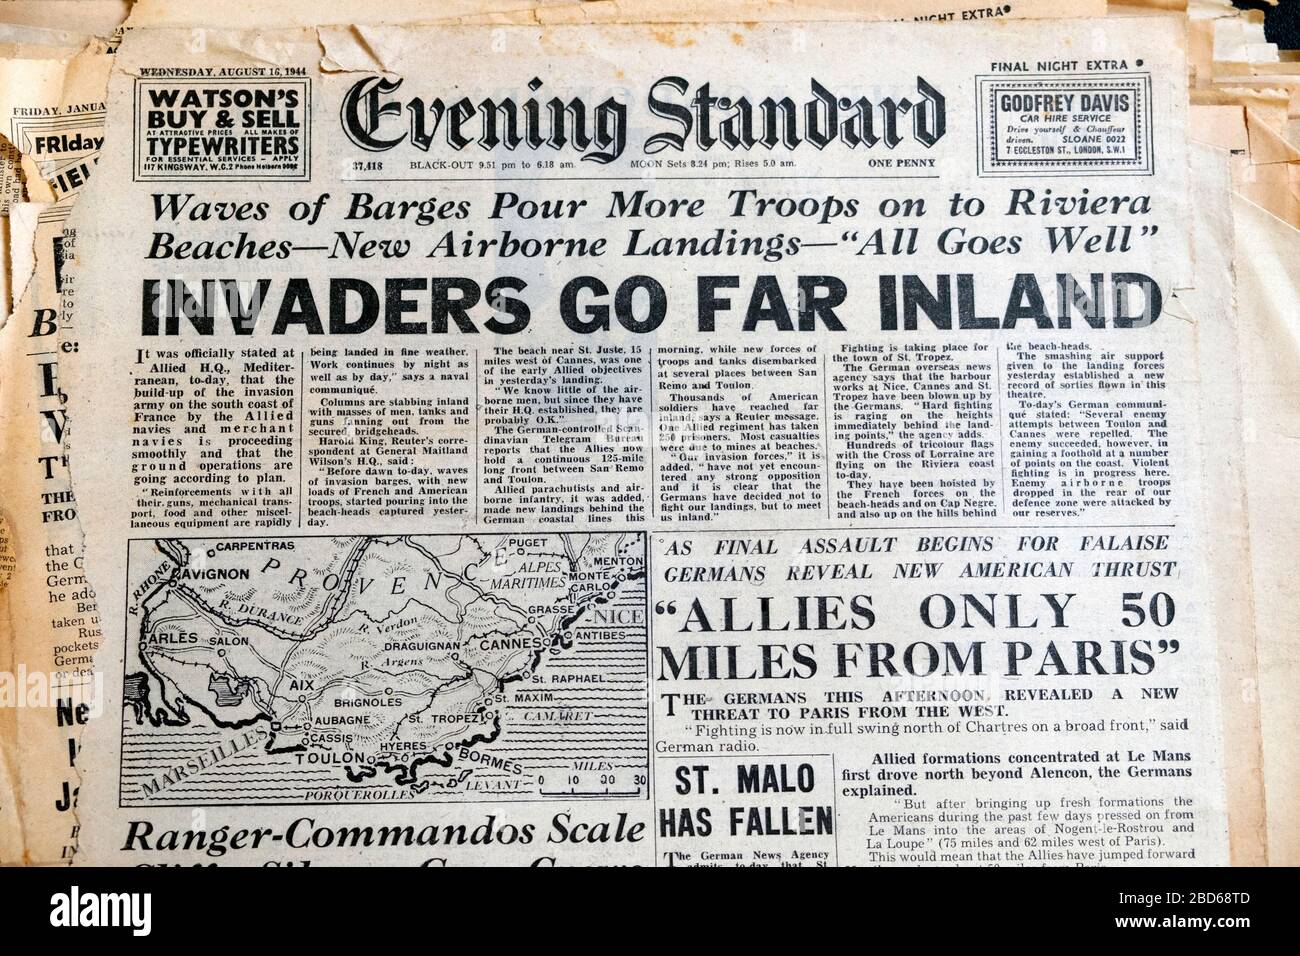 'Invaders go Far Inland' 16 August 1944 Evening Standard WW2 British newspaper headline in London England  Great Britain UK Stock Photo